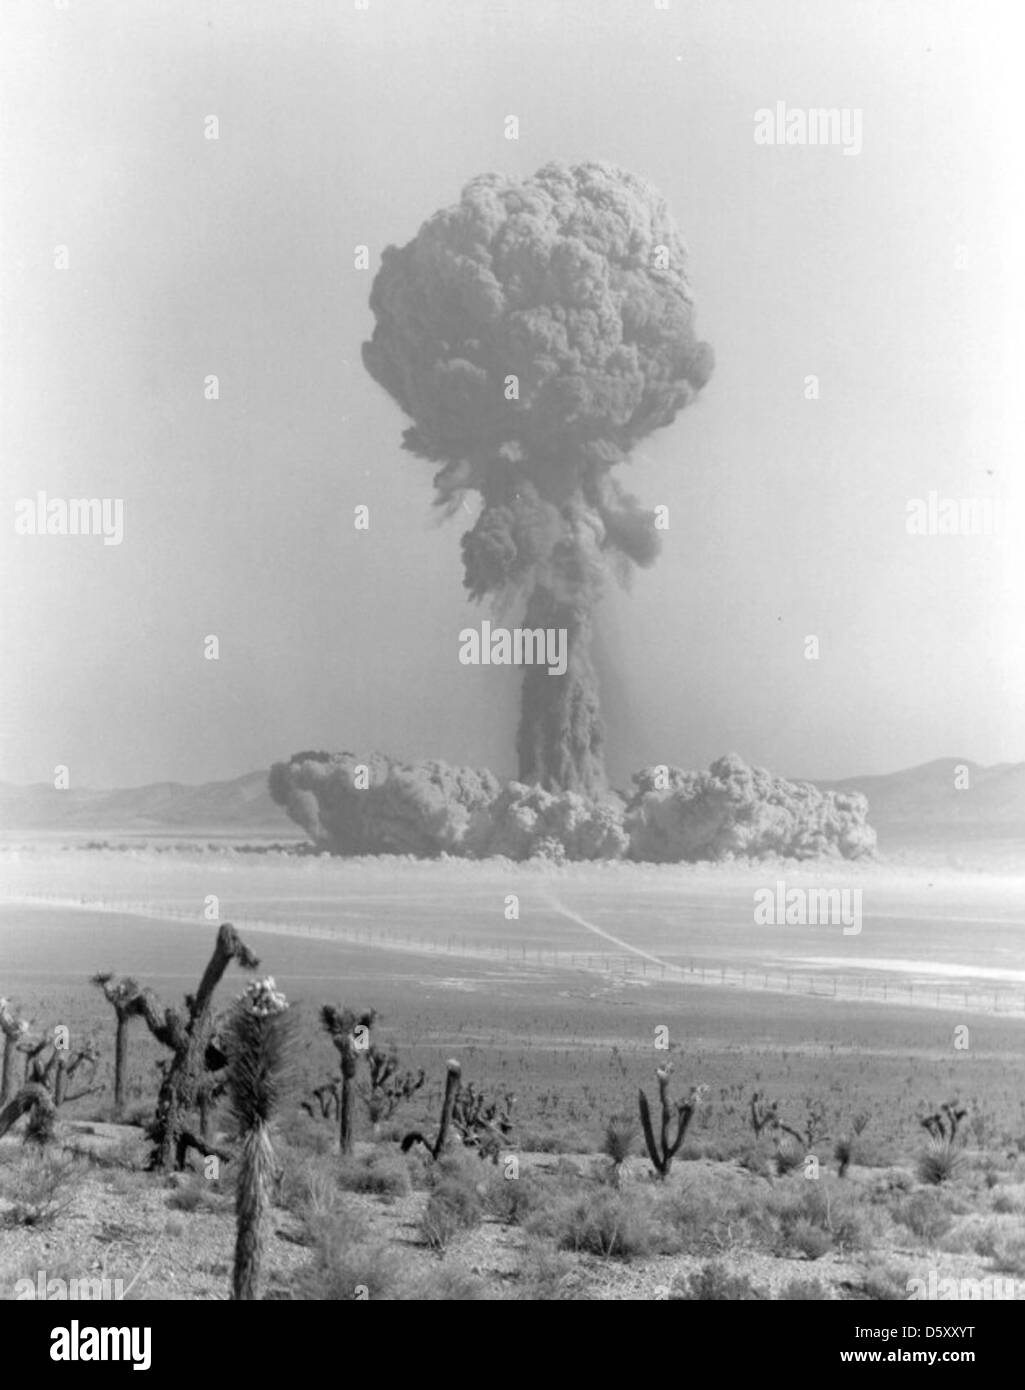 'OPERATION PLUMB BOB' 'SHOT FIZEAU' - NEVADA TEST SITE, September 14, 1957. Stock Photo